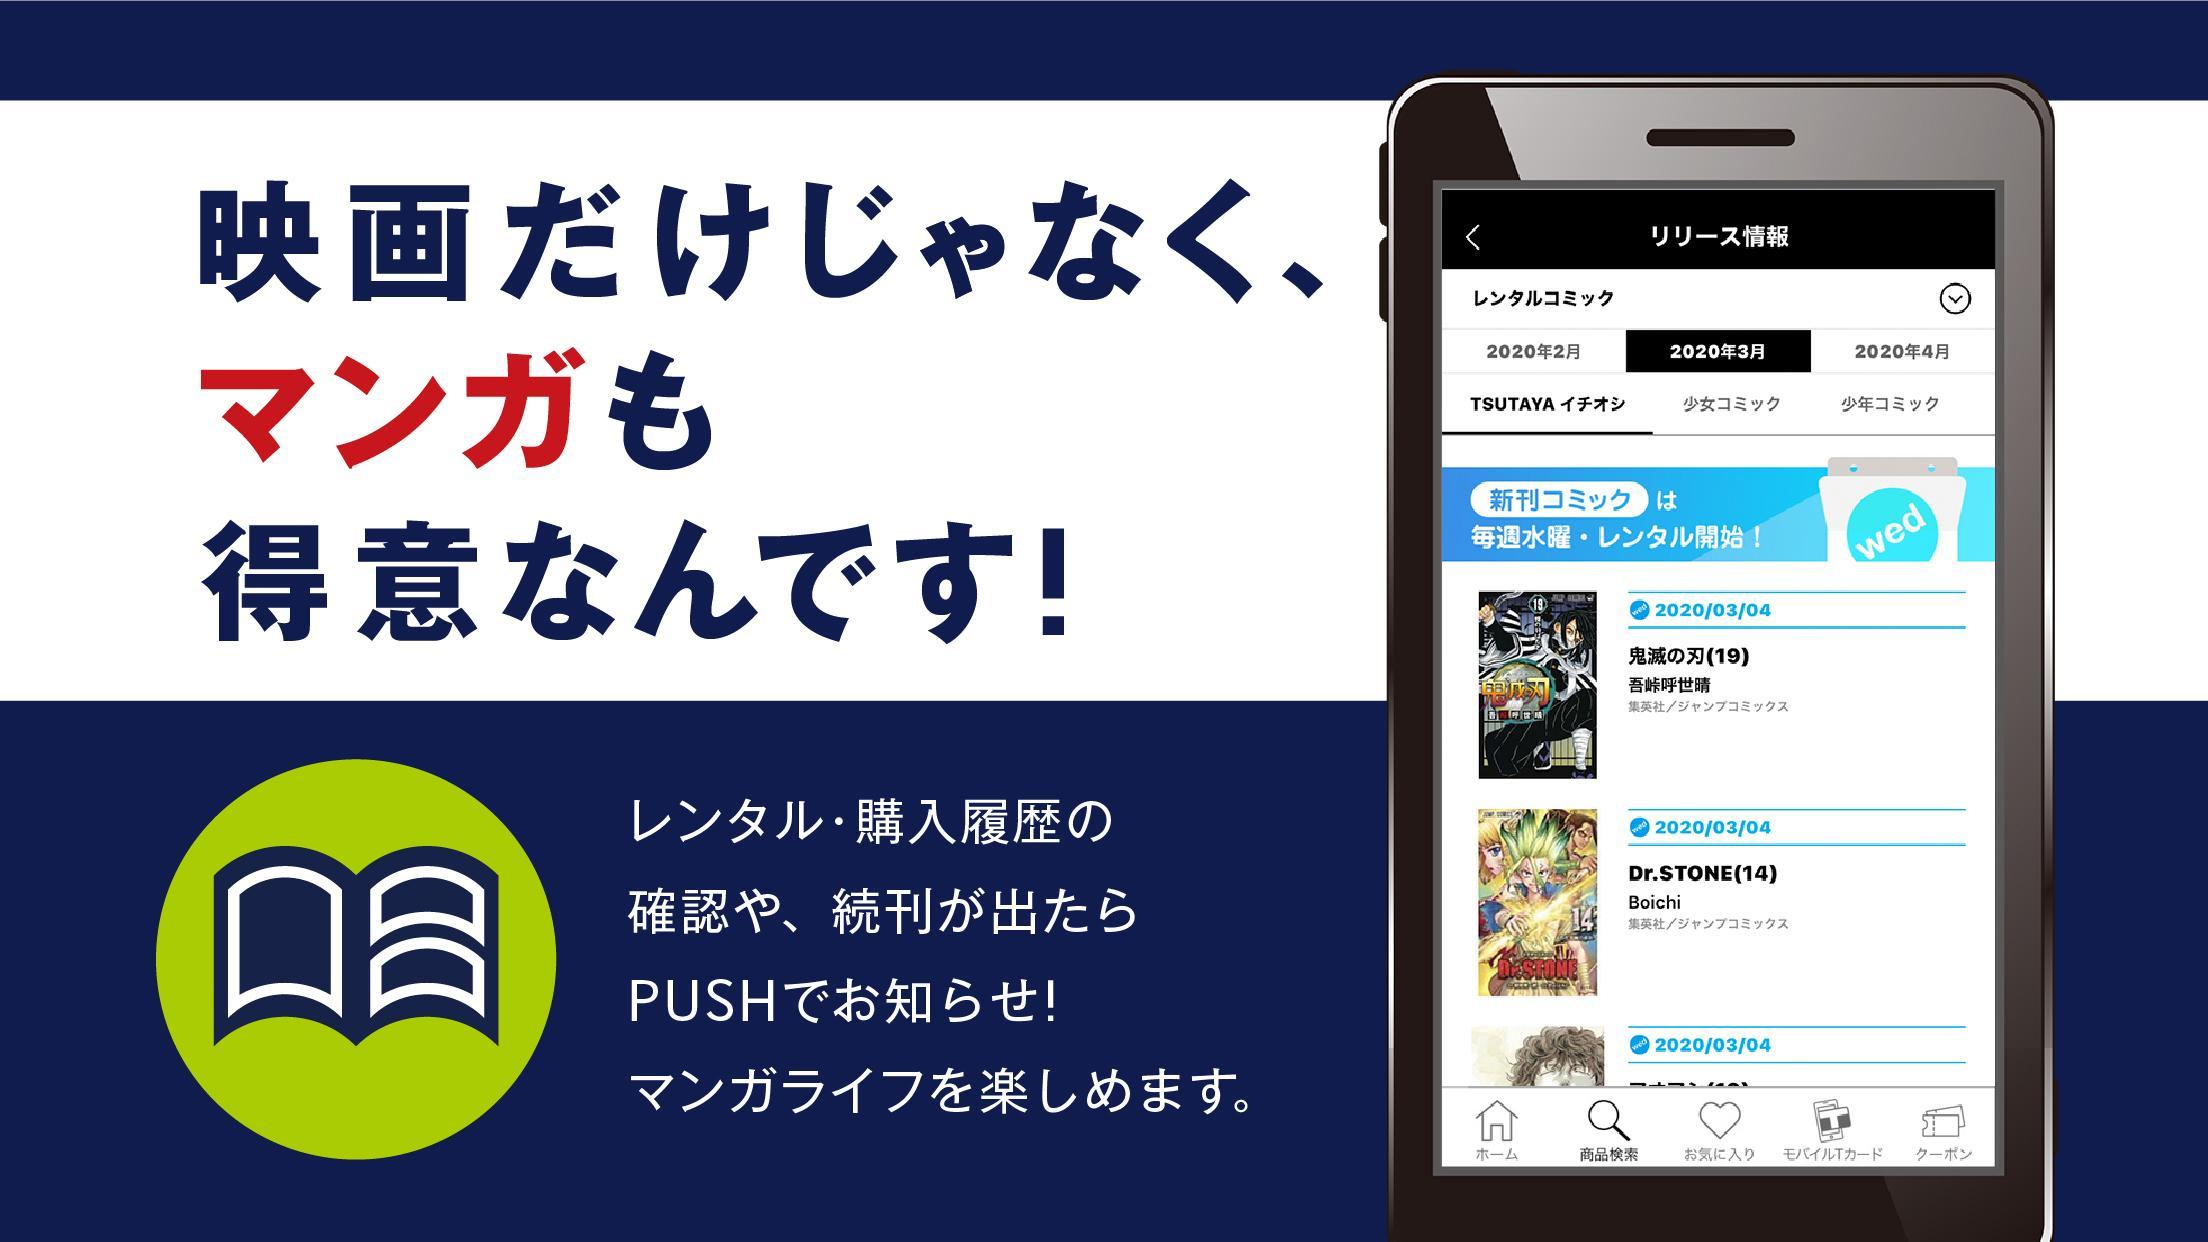 Tsutayaアプリ レンタル利用登録や更新手続きができ コンビニでポイントも貯まる For Android Apk Download